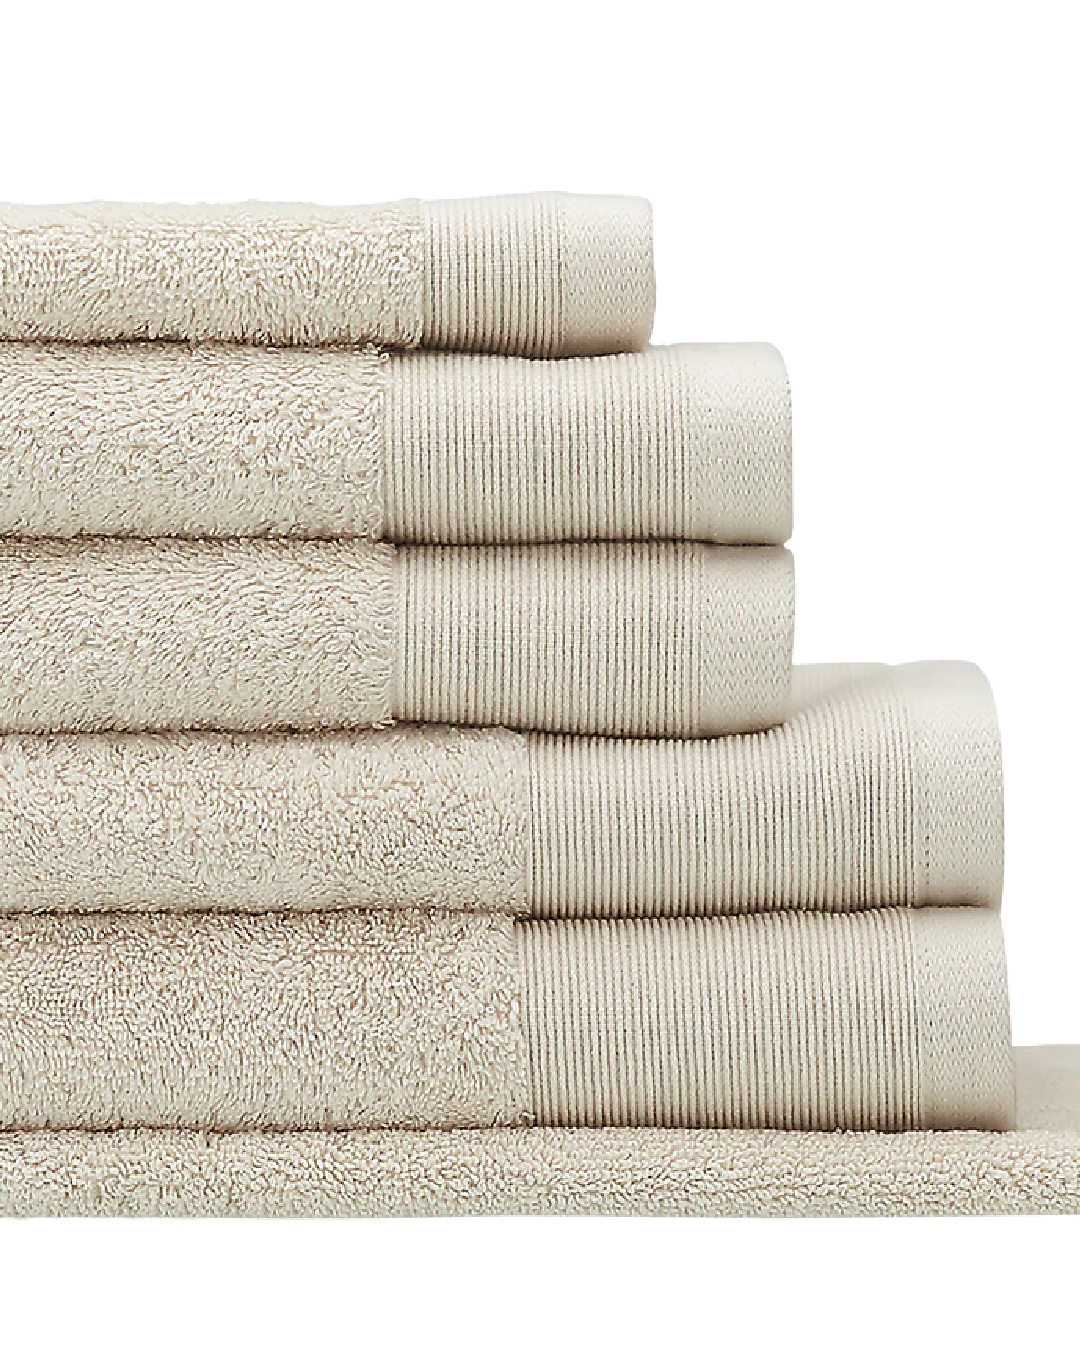 Vida organic Sand bathroom towels